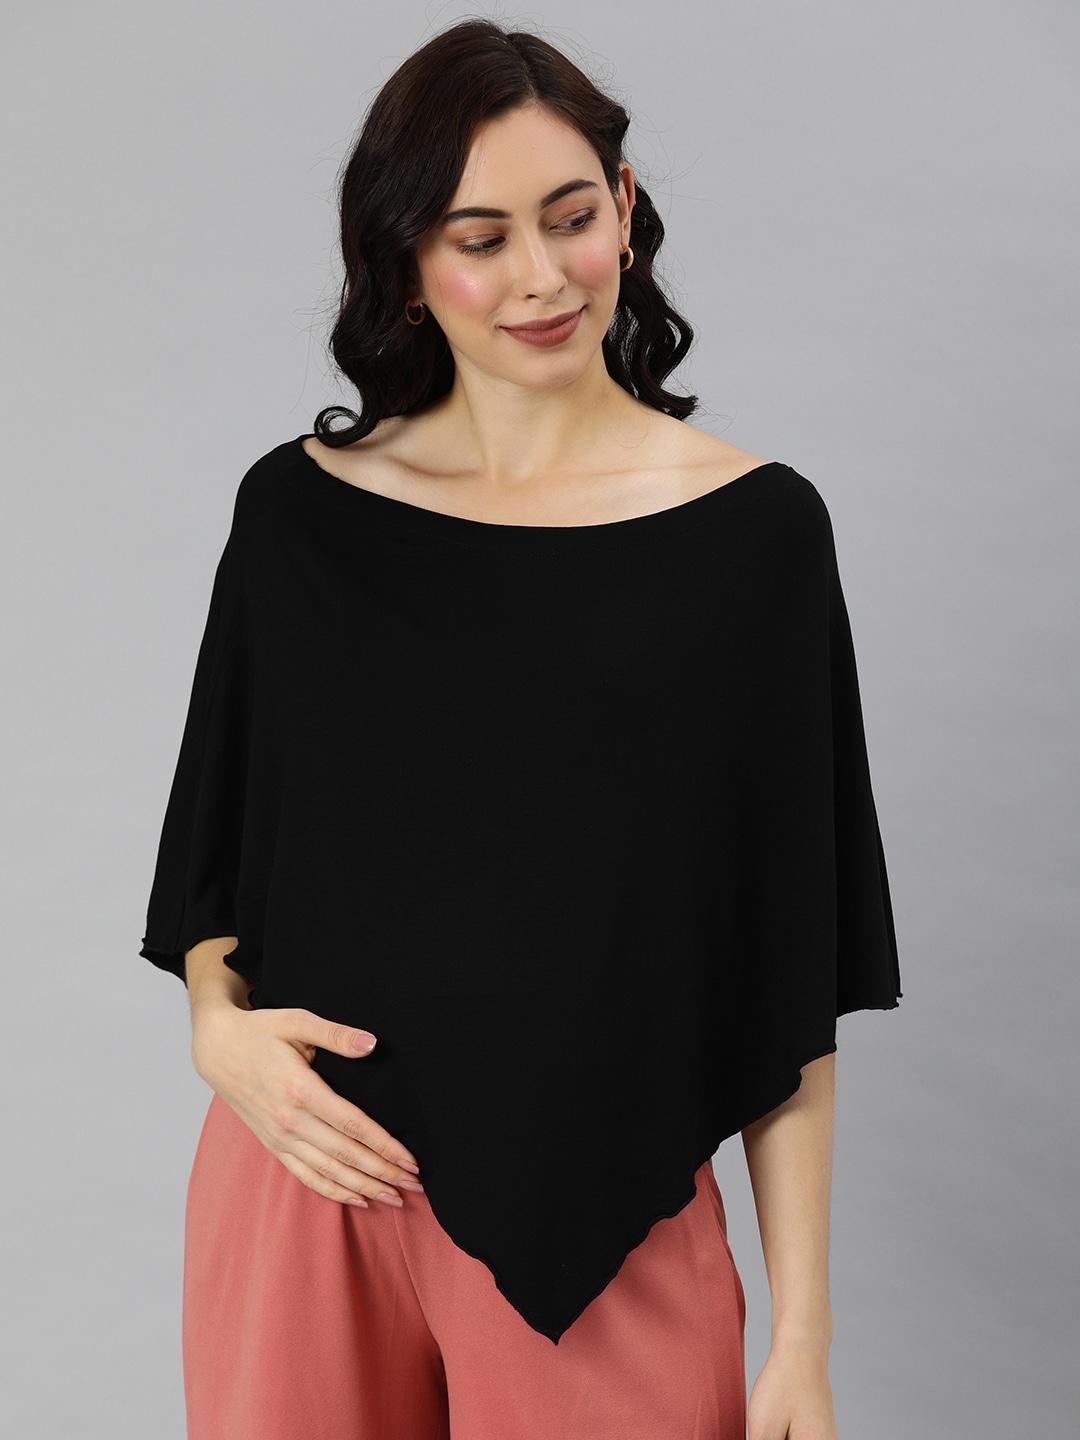 blush 9 maternity women black solid maternity cape top